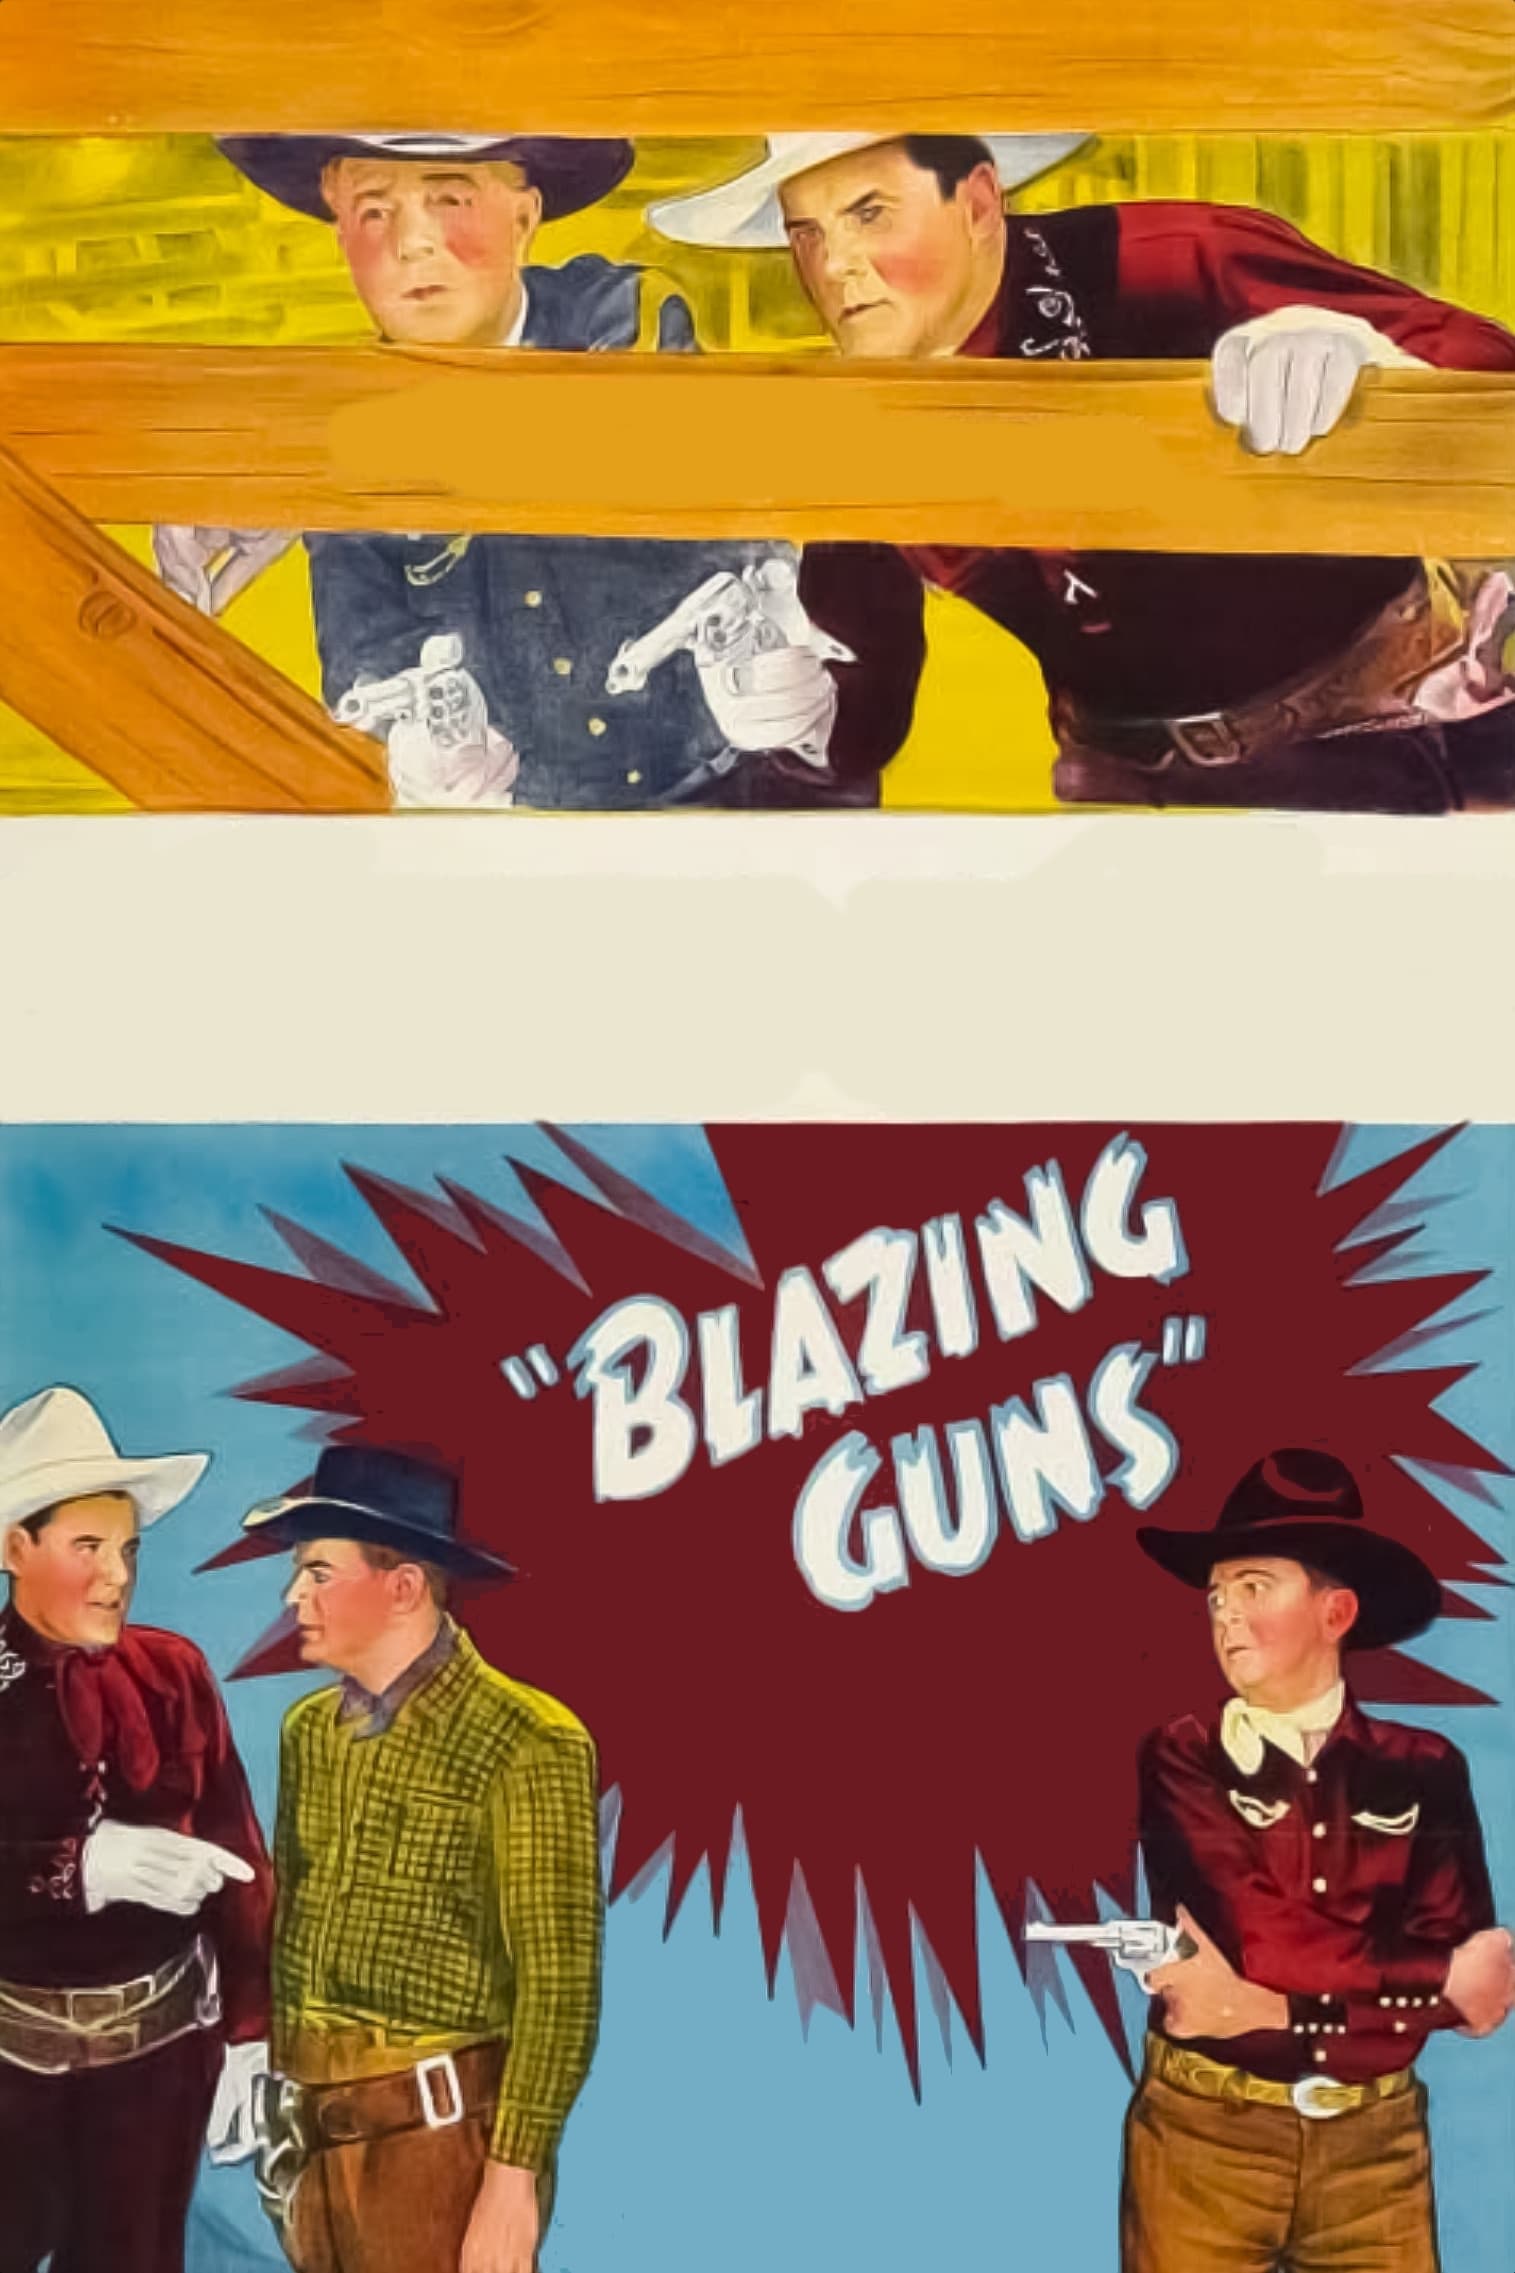 Blazing Guns (1943)